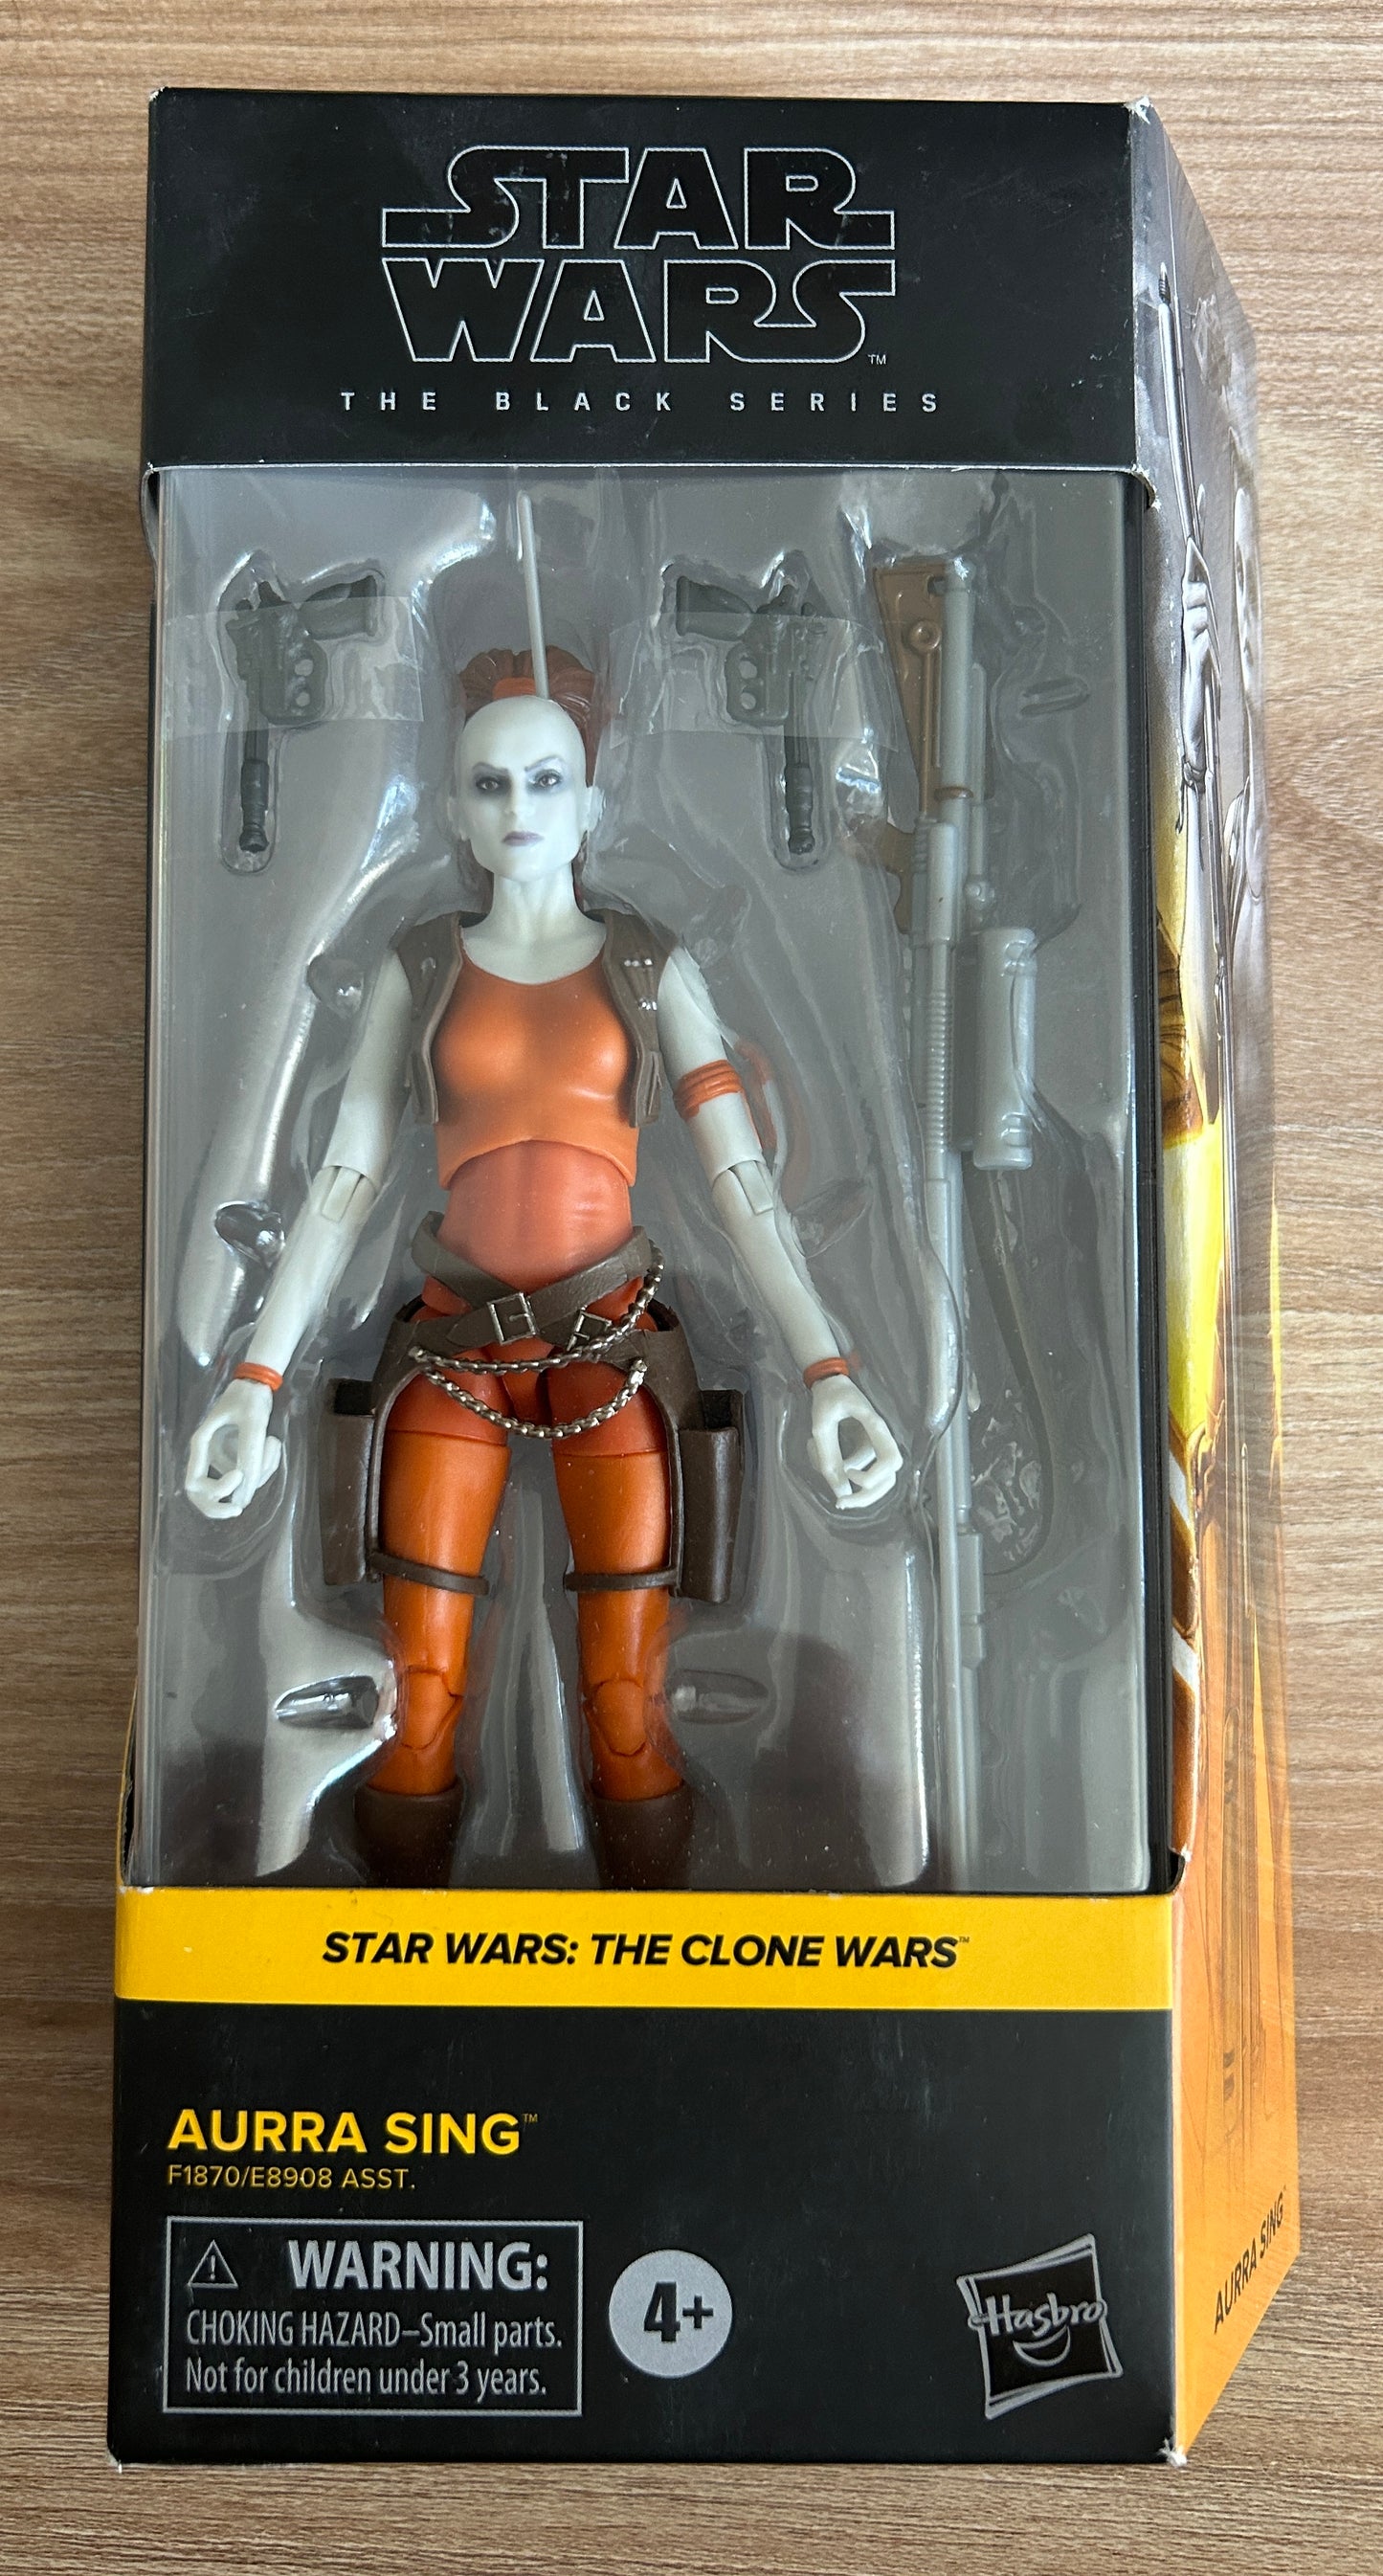 STAR WARS The Clone Wars - The Black Series - Figurine de AURRA SING